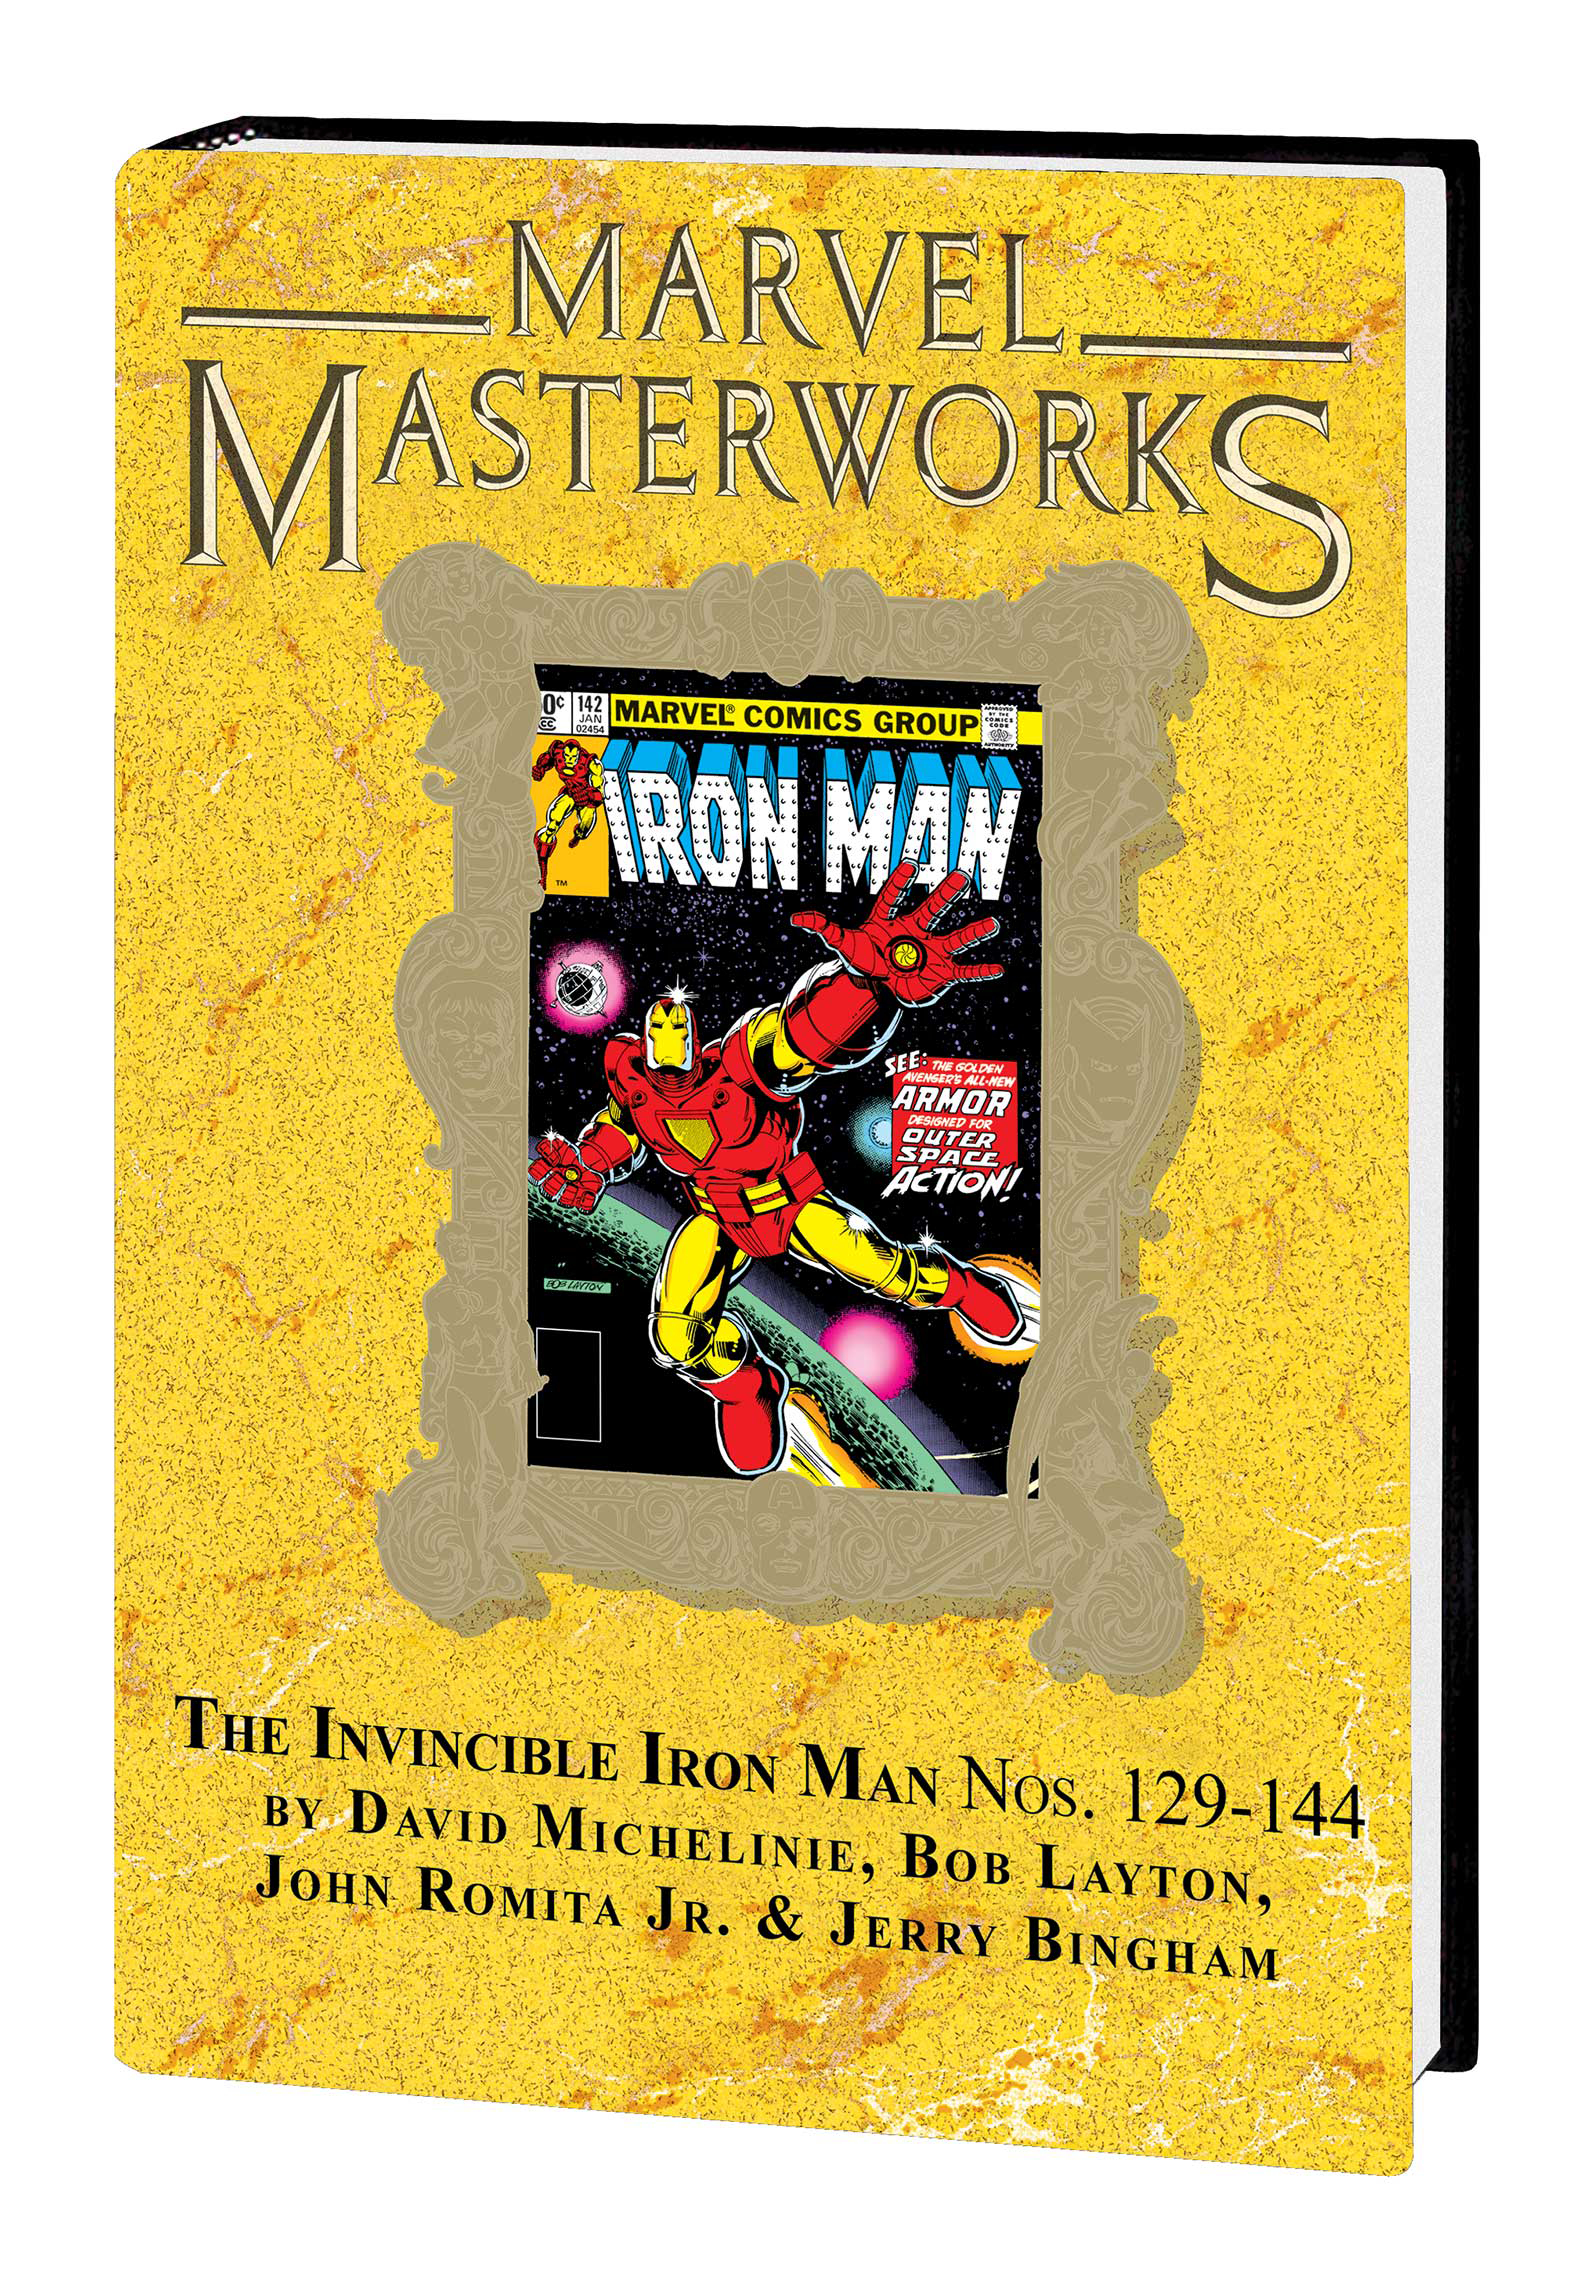 Marvel Masterworks Invincible Iron Man Hardcover Volume 14 Direct Market Edition Edition 316